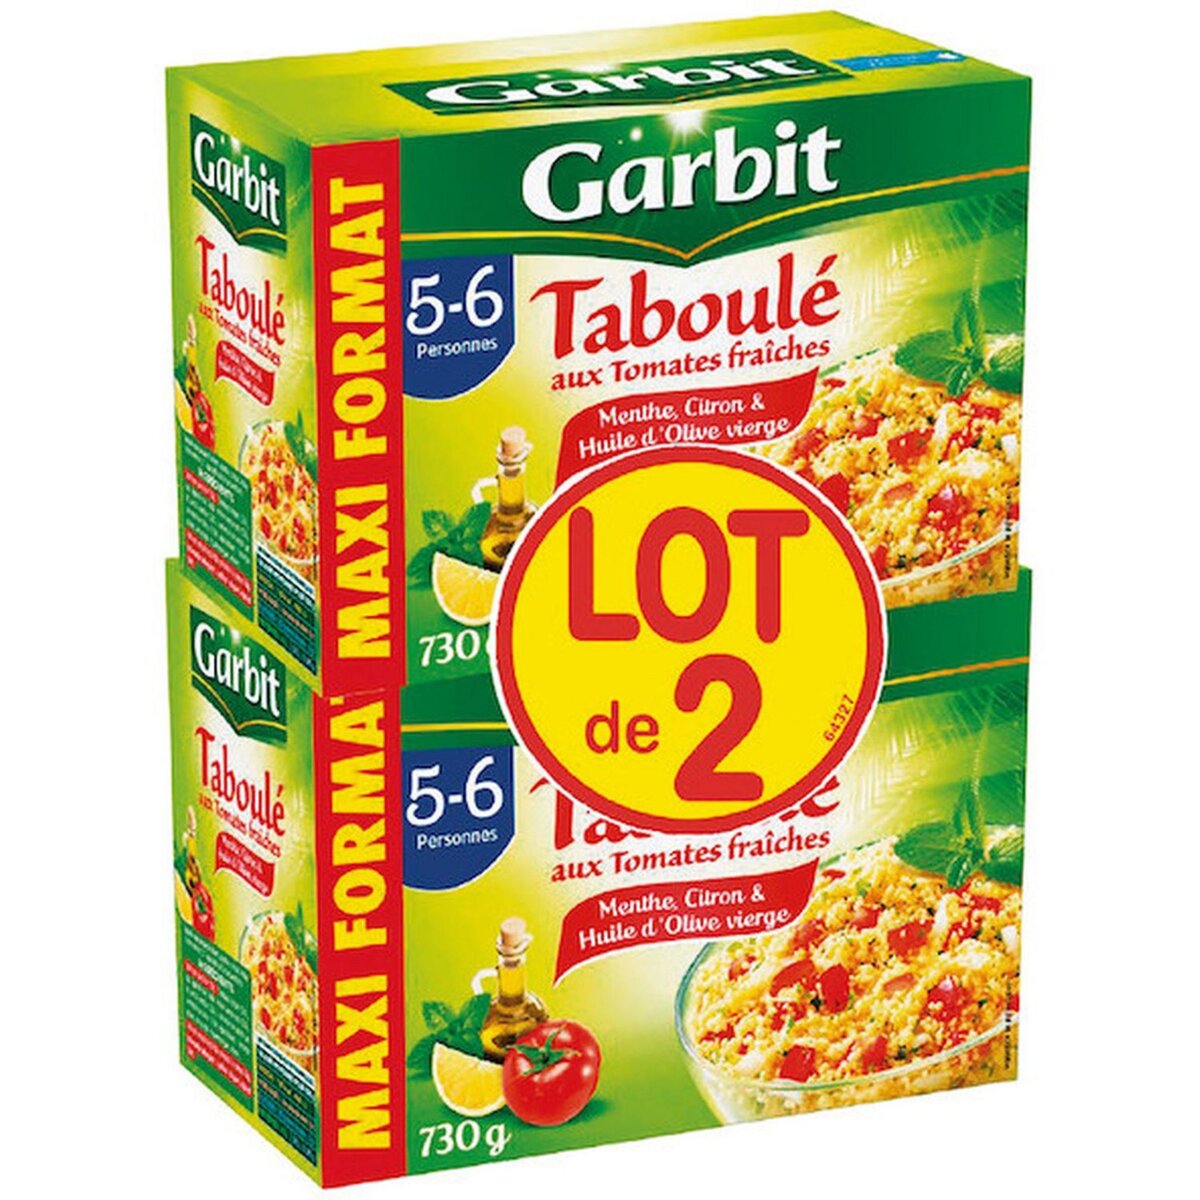 GARBIT Taboulé aux tomates fraiches  2x730g